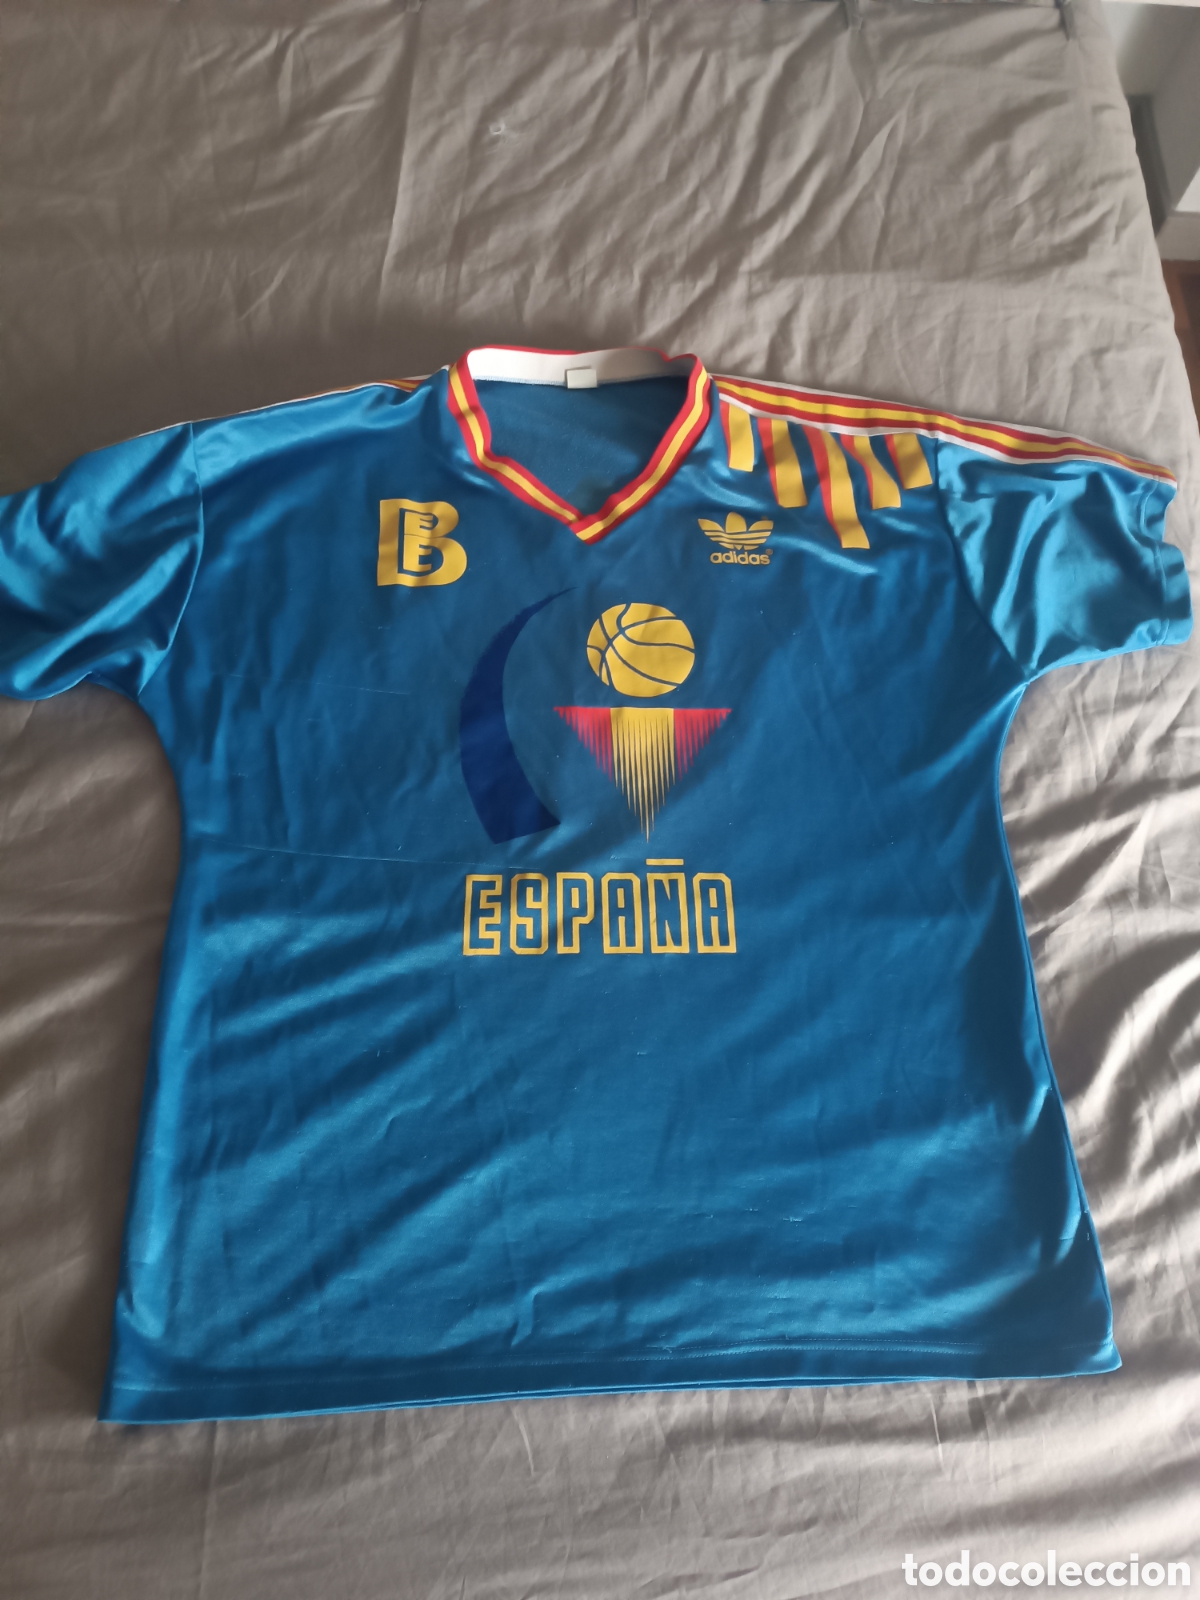 camiseta antigua baloncesto españa - Compra venta en todocoleccion